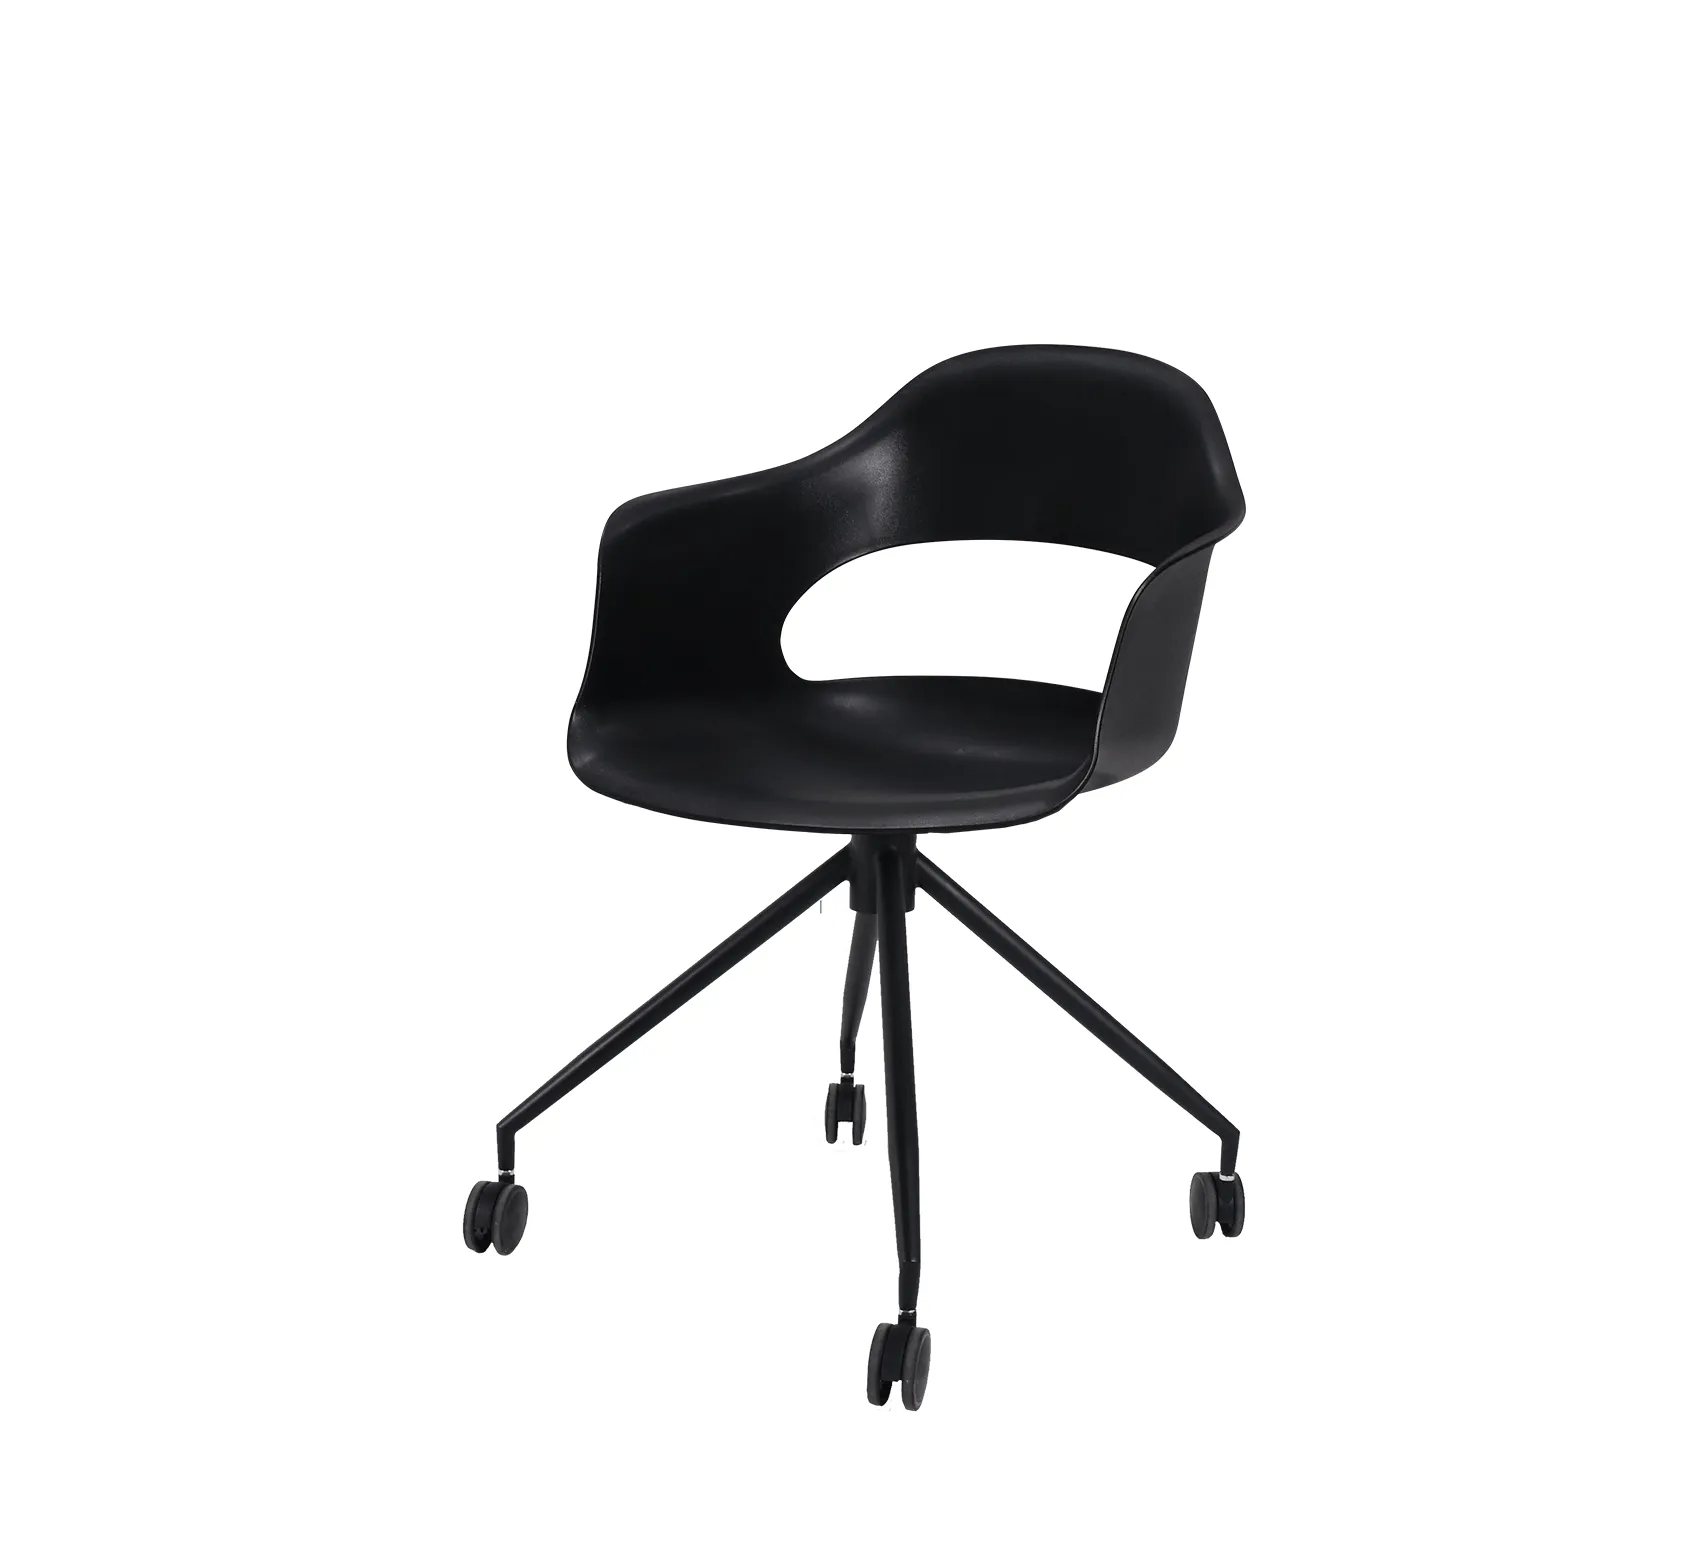 Olymplast Avanty Chair B - BLACK